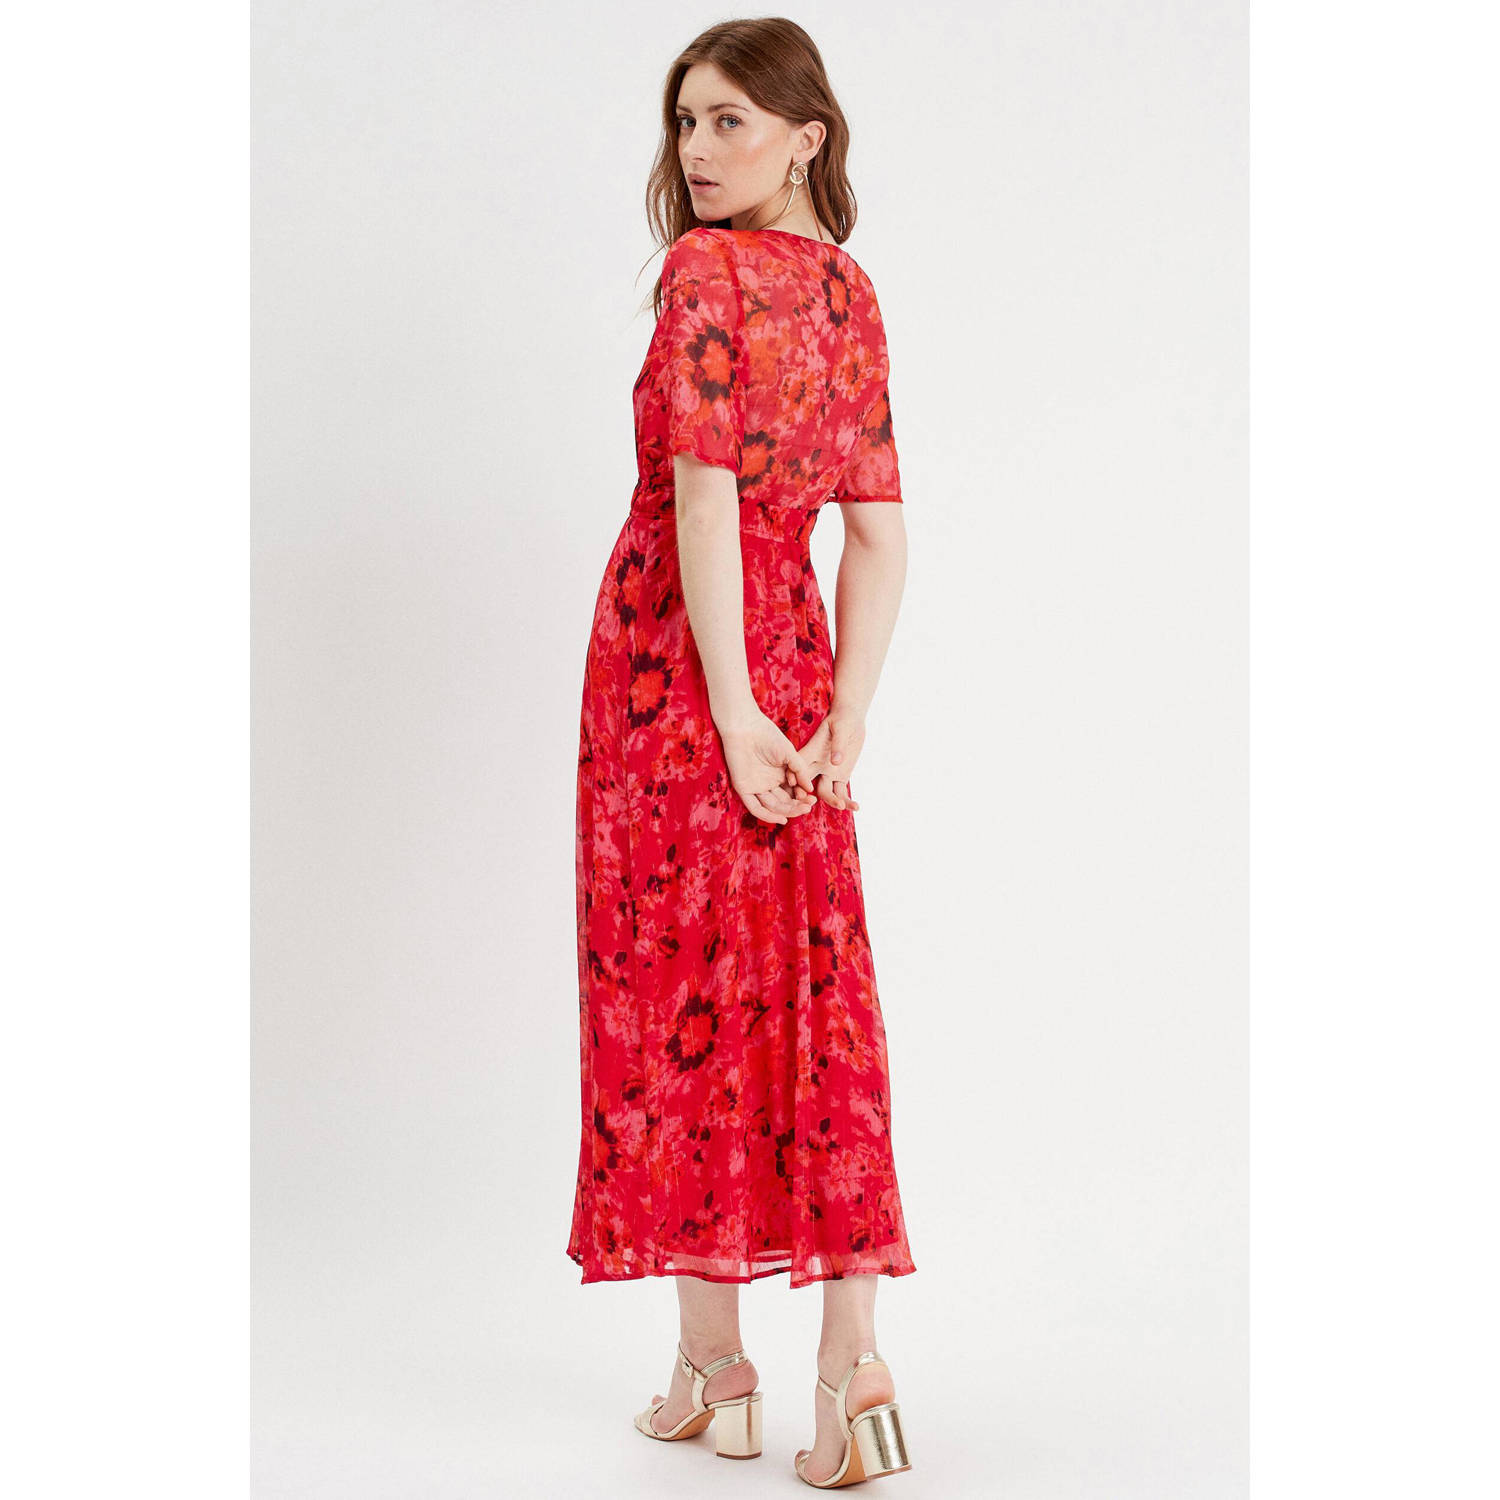 Cache semi-transparante jurk met all over print rood multi